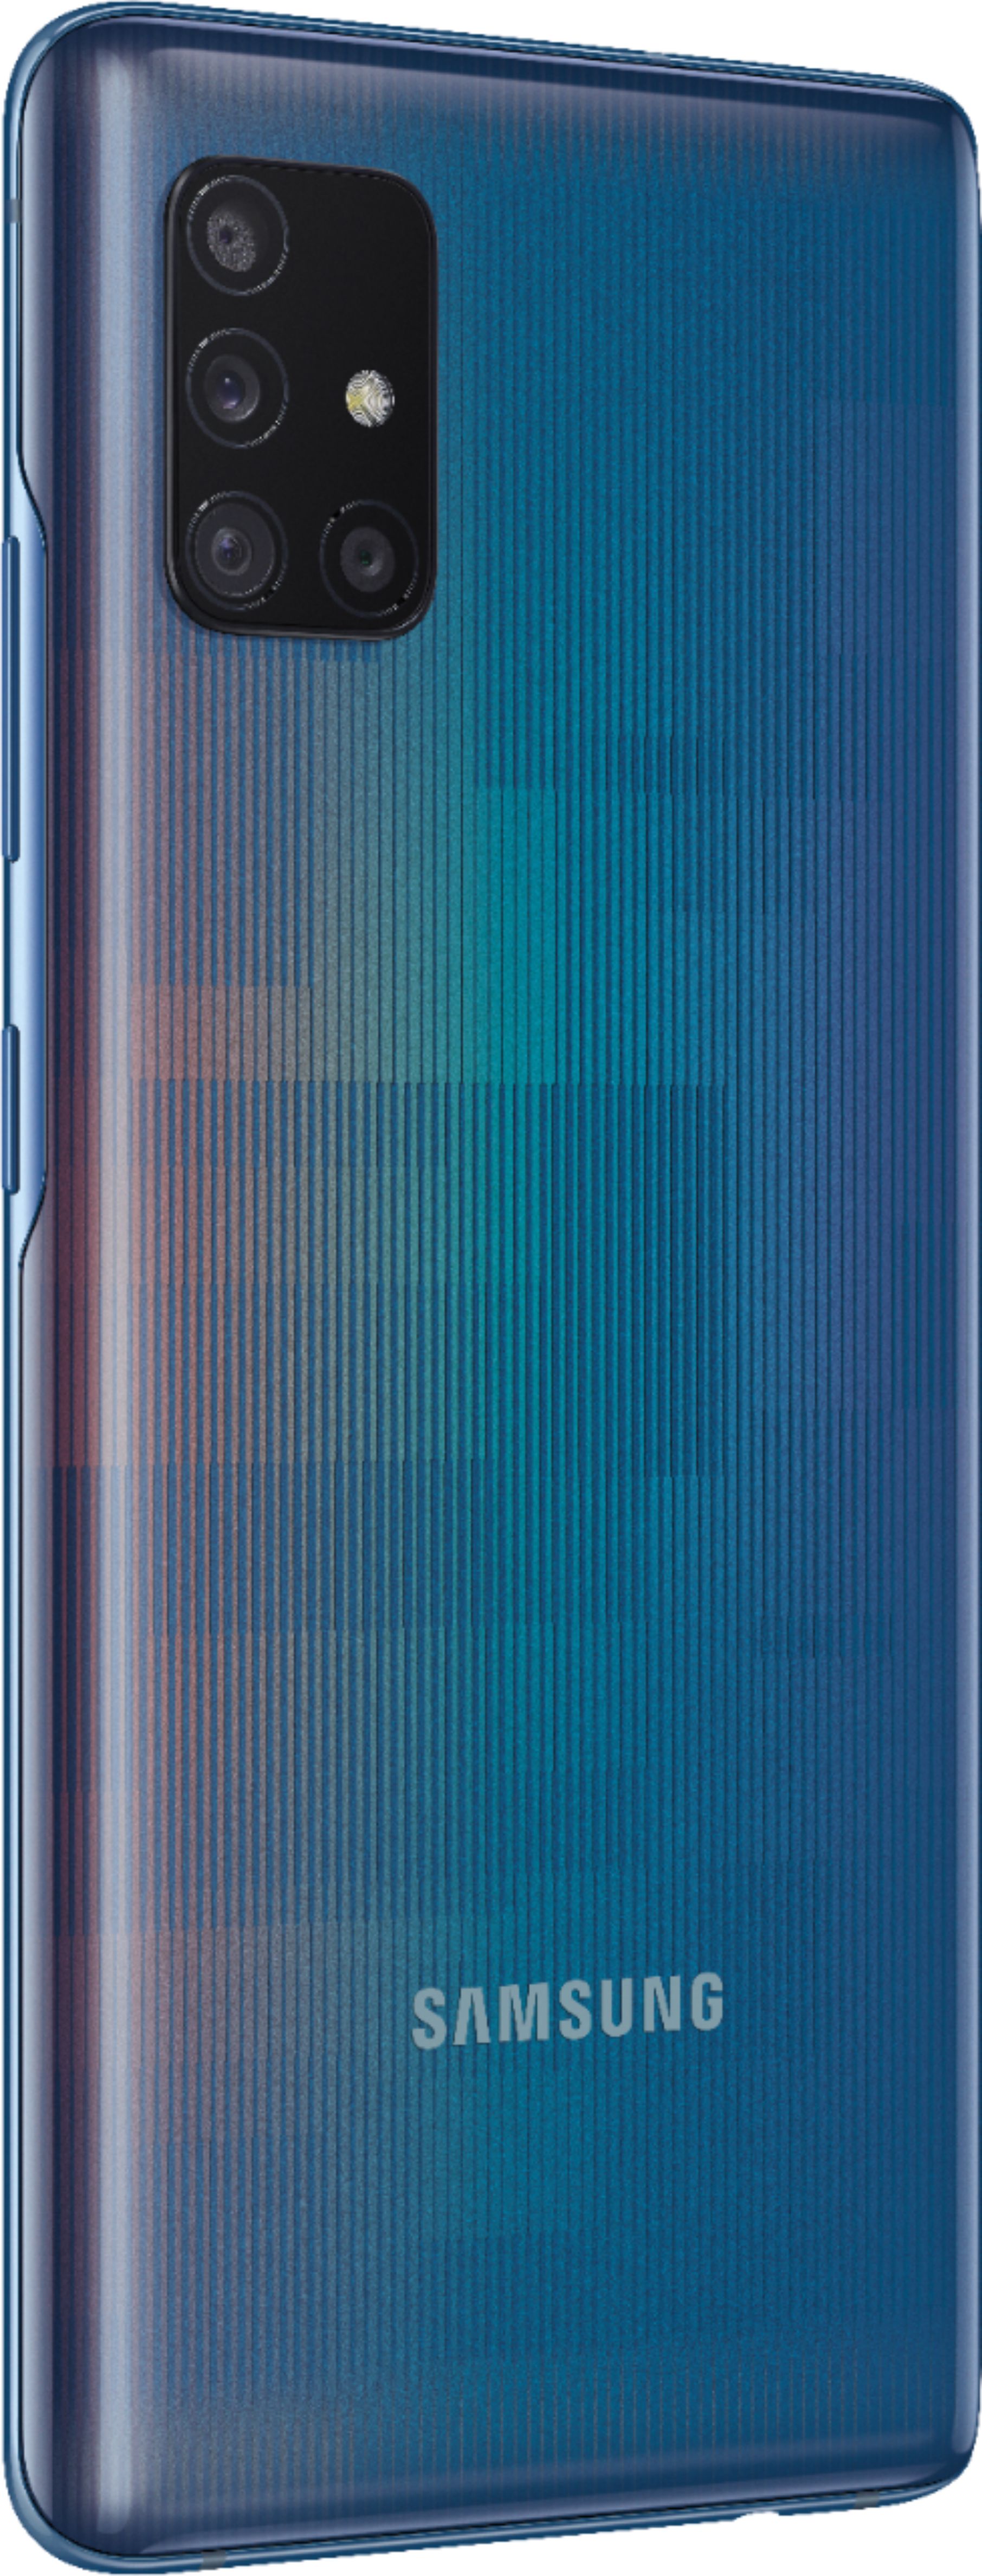 Best Buy: Samsung Galaxy A51 5G UW 128GB Prism Bricks Blue